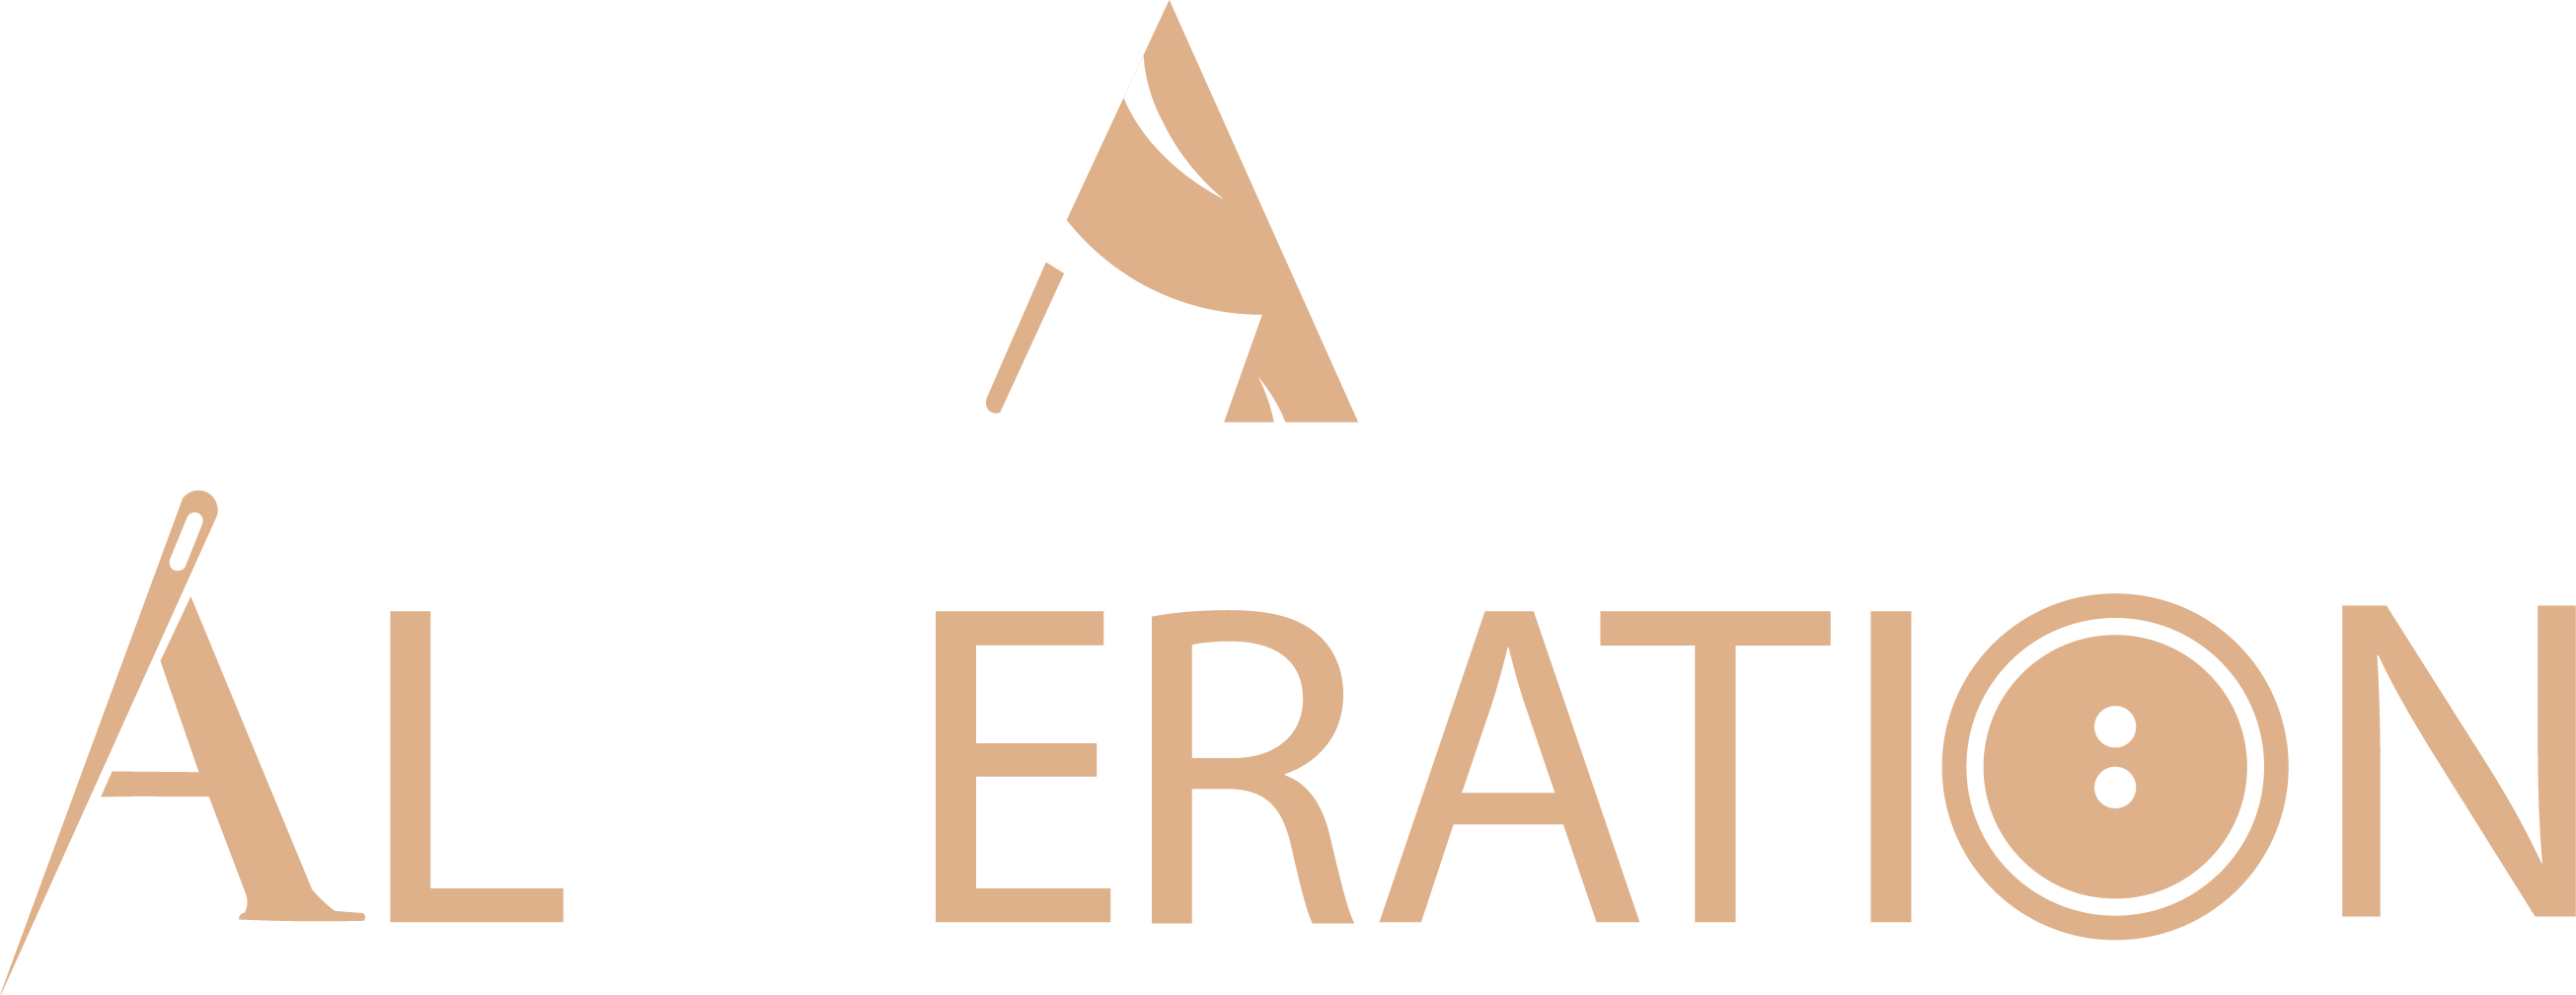 Curtain Alteration bottom logo